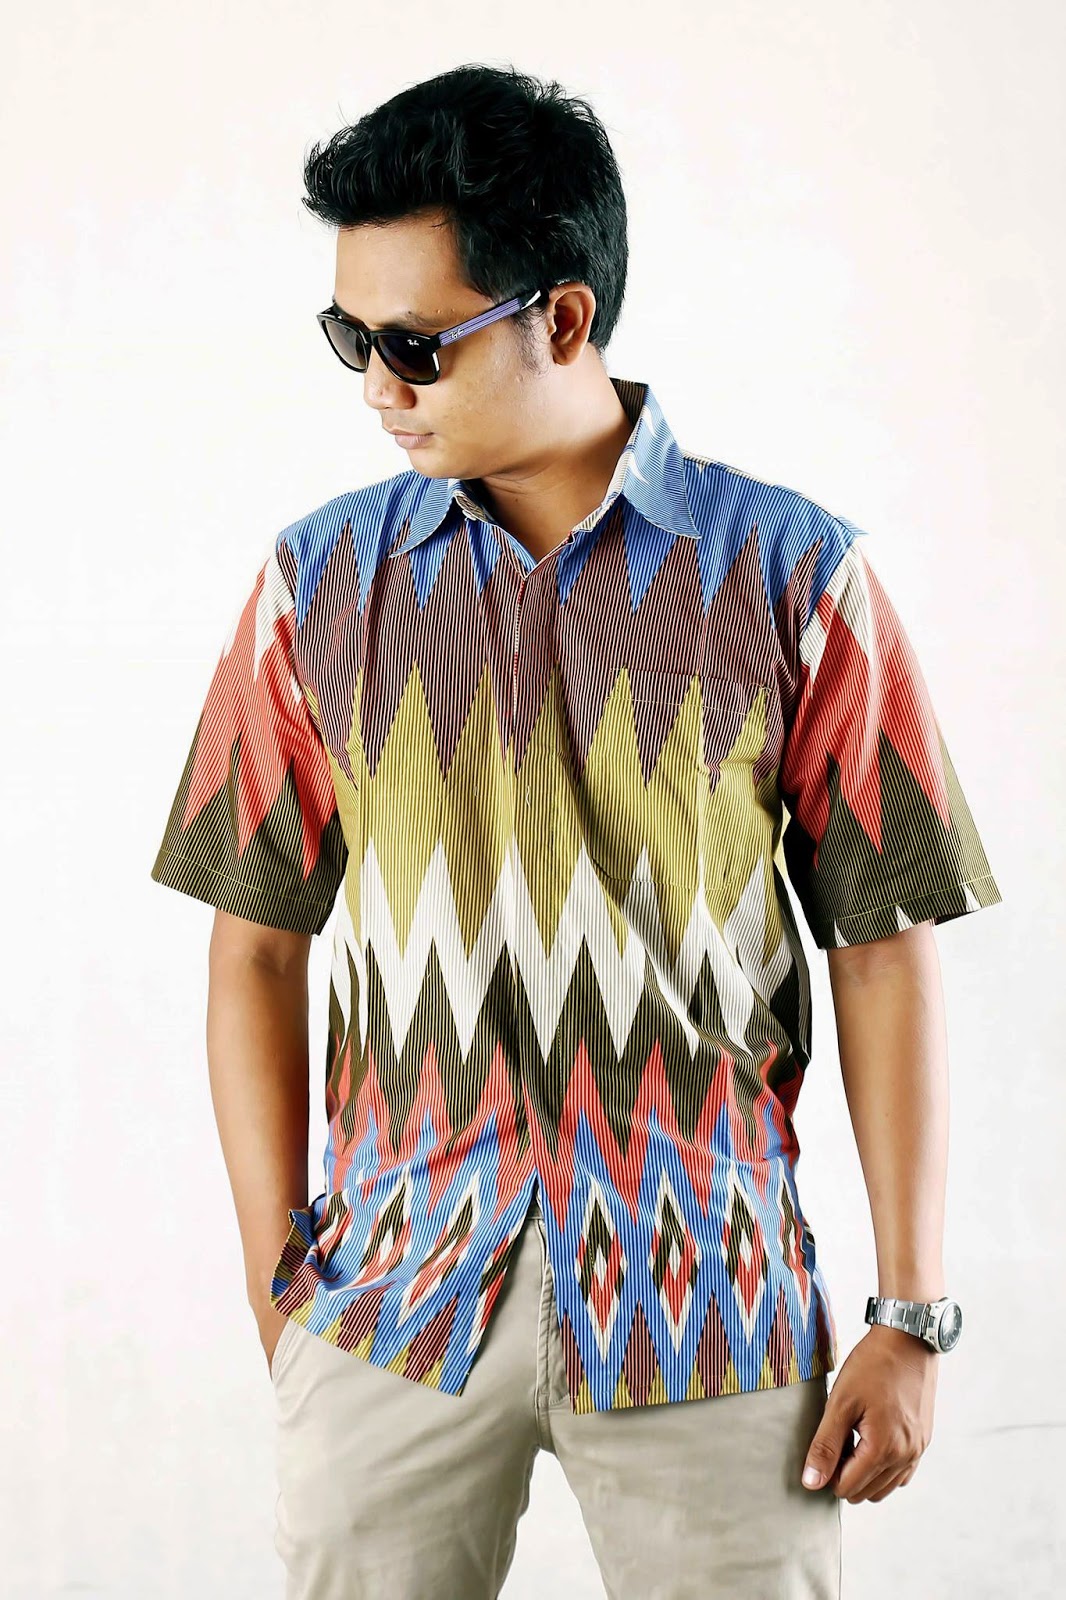  Model  Baju Kemeja  Batik  Motif Rang rang Batik  Bagoes Solo